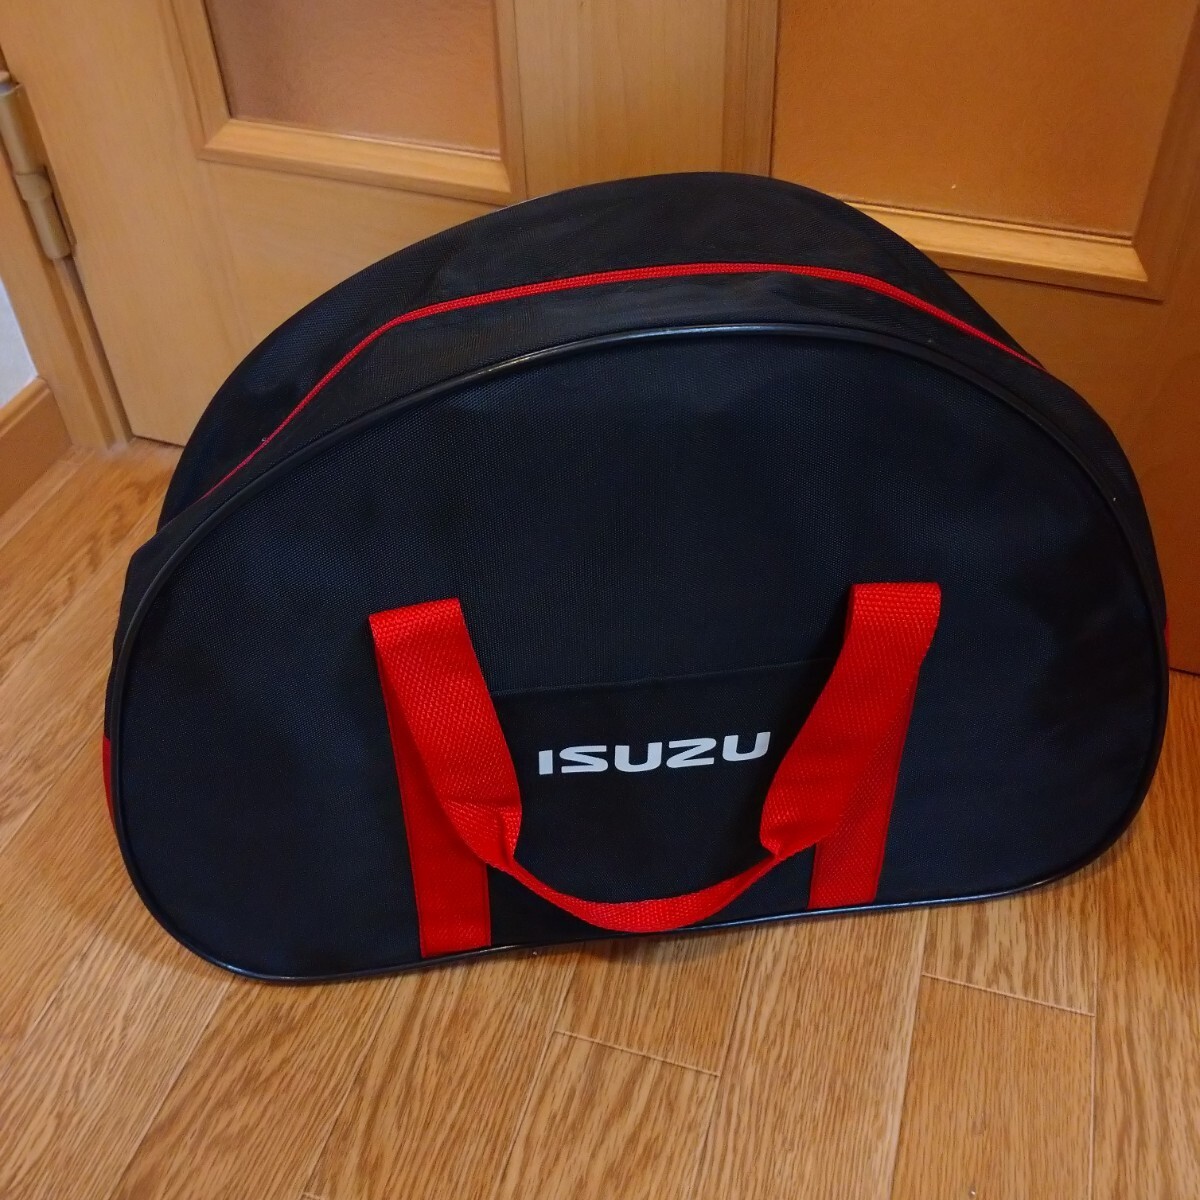 ISUZU Isuzu сумка не продается инструмент inserting мода Isuzu товары коллекция самосвал автобус грузовик Logo Logo bag cap fashion truck